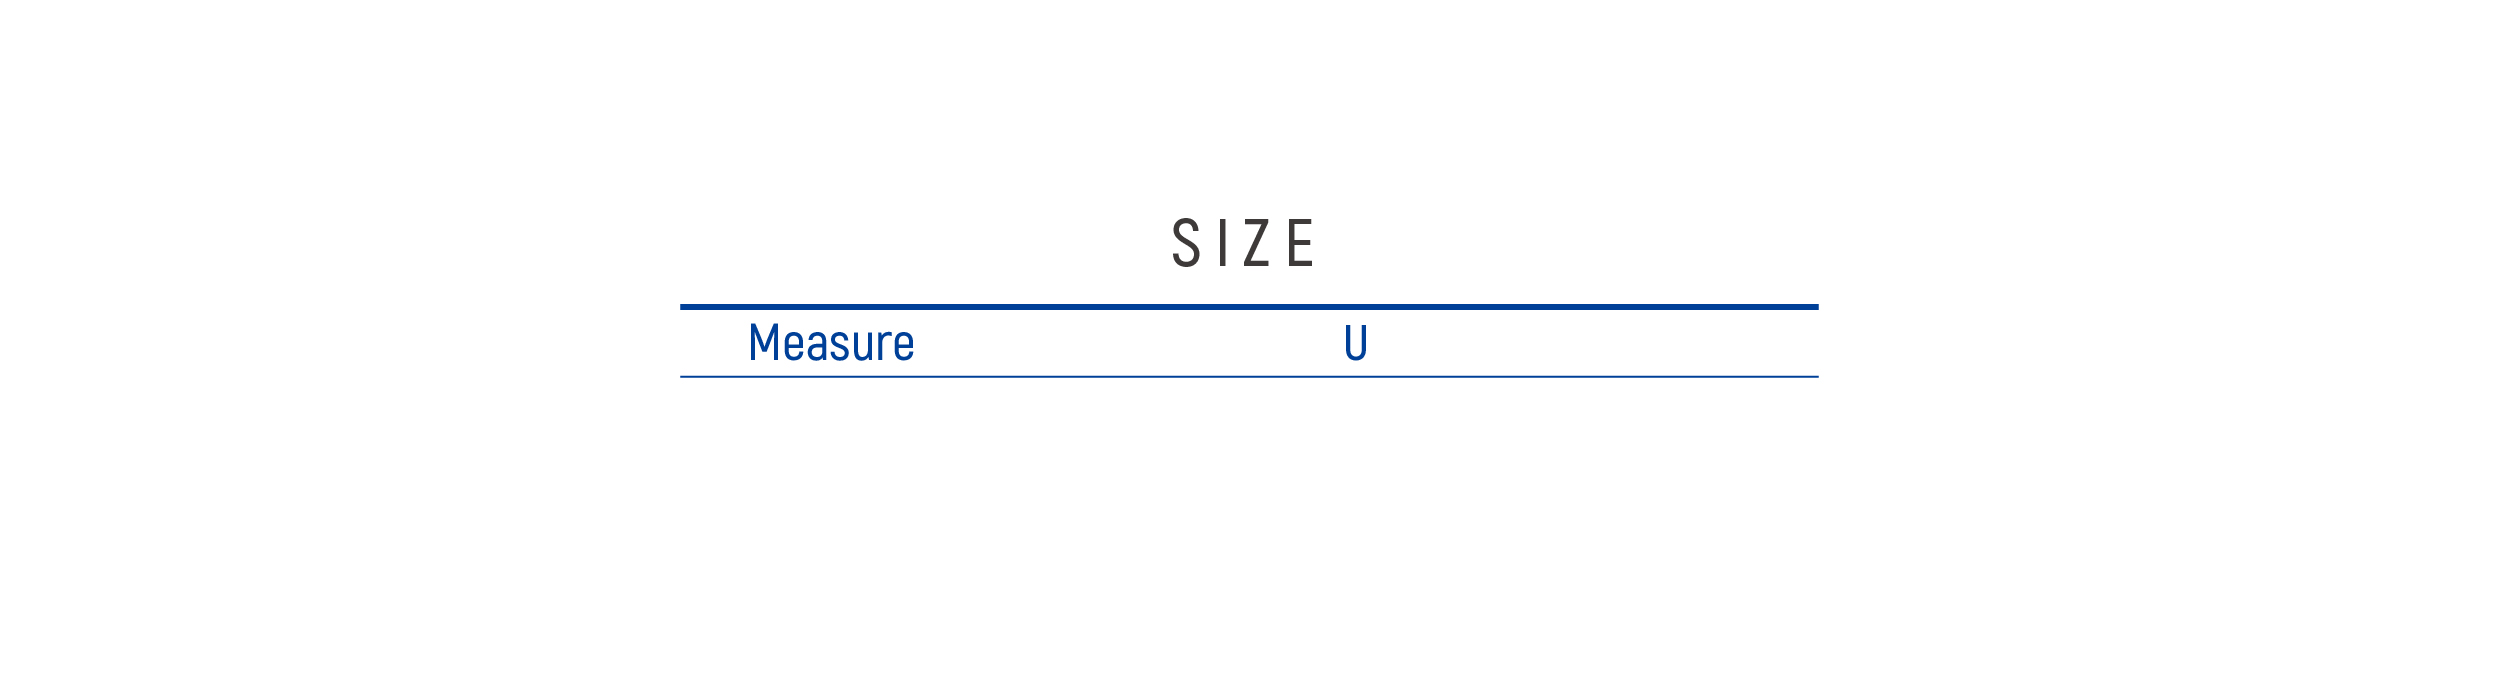 DR-E017 Size table image